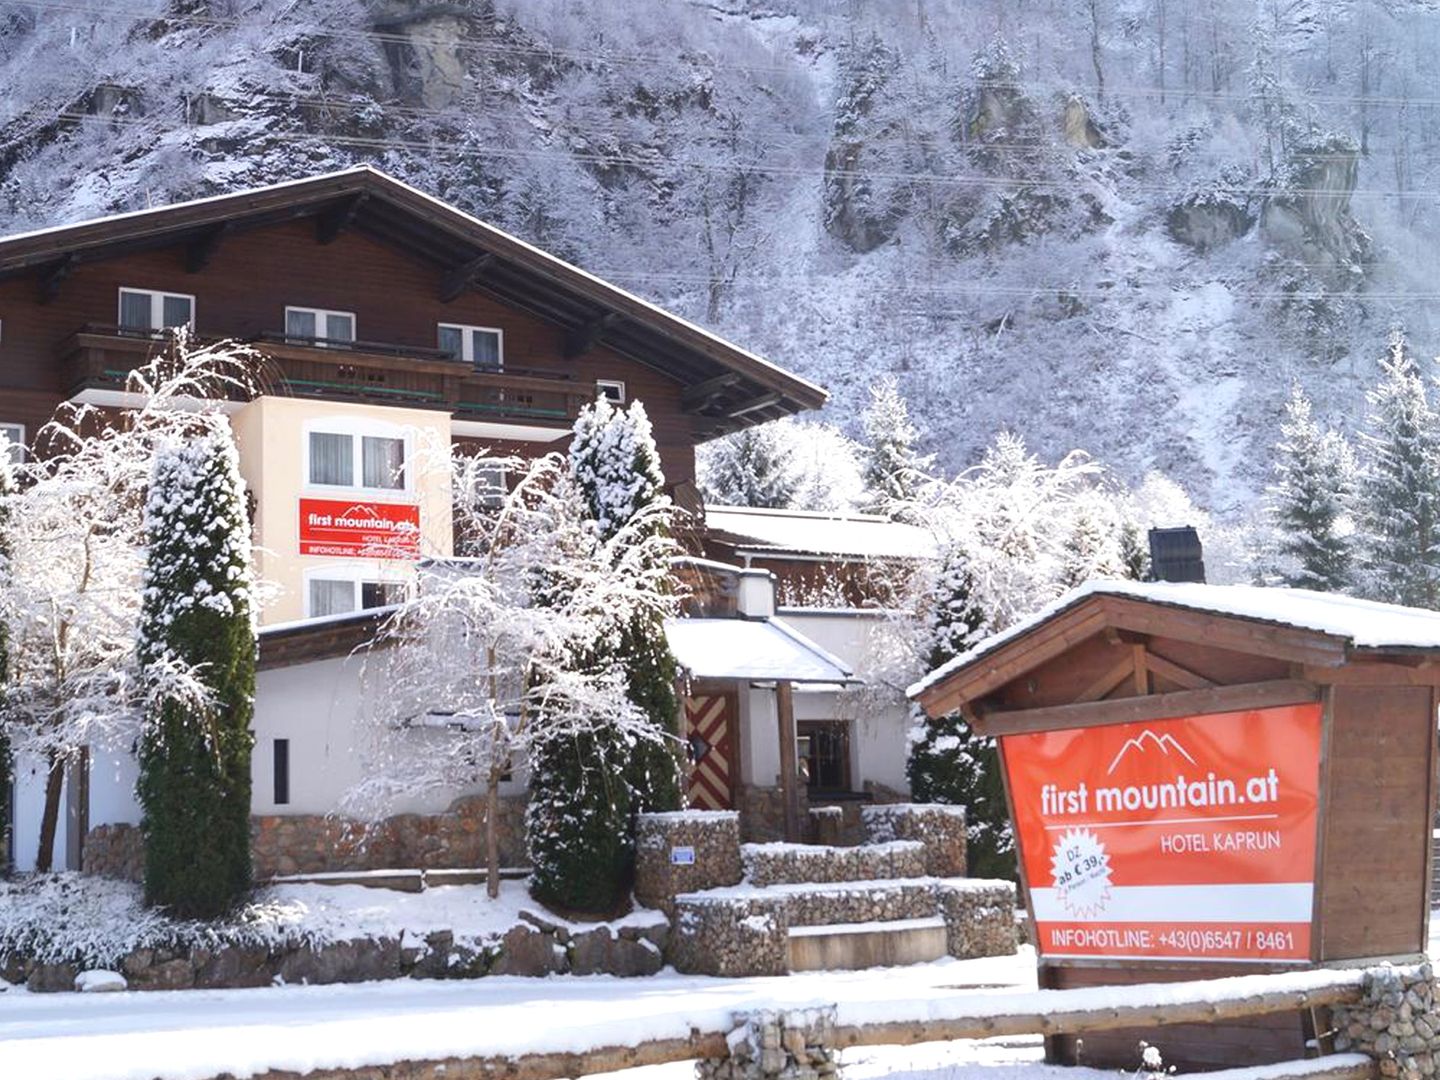 Unterkunft first mountain Hotel Kaprun (Ski-Opening), Kaprun, Österreich